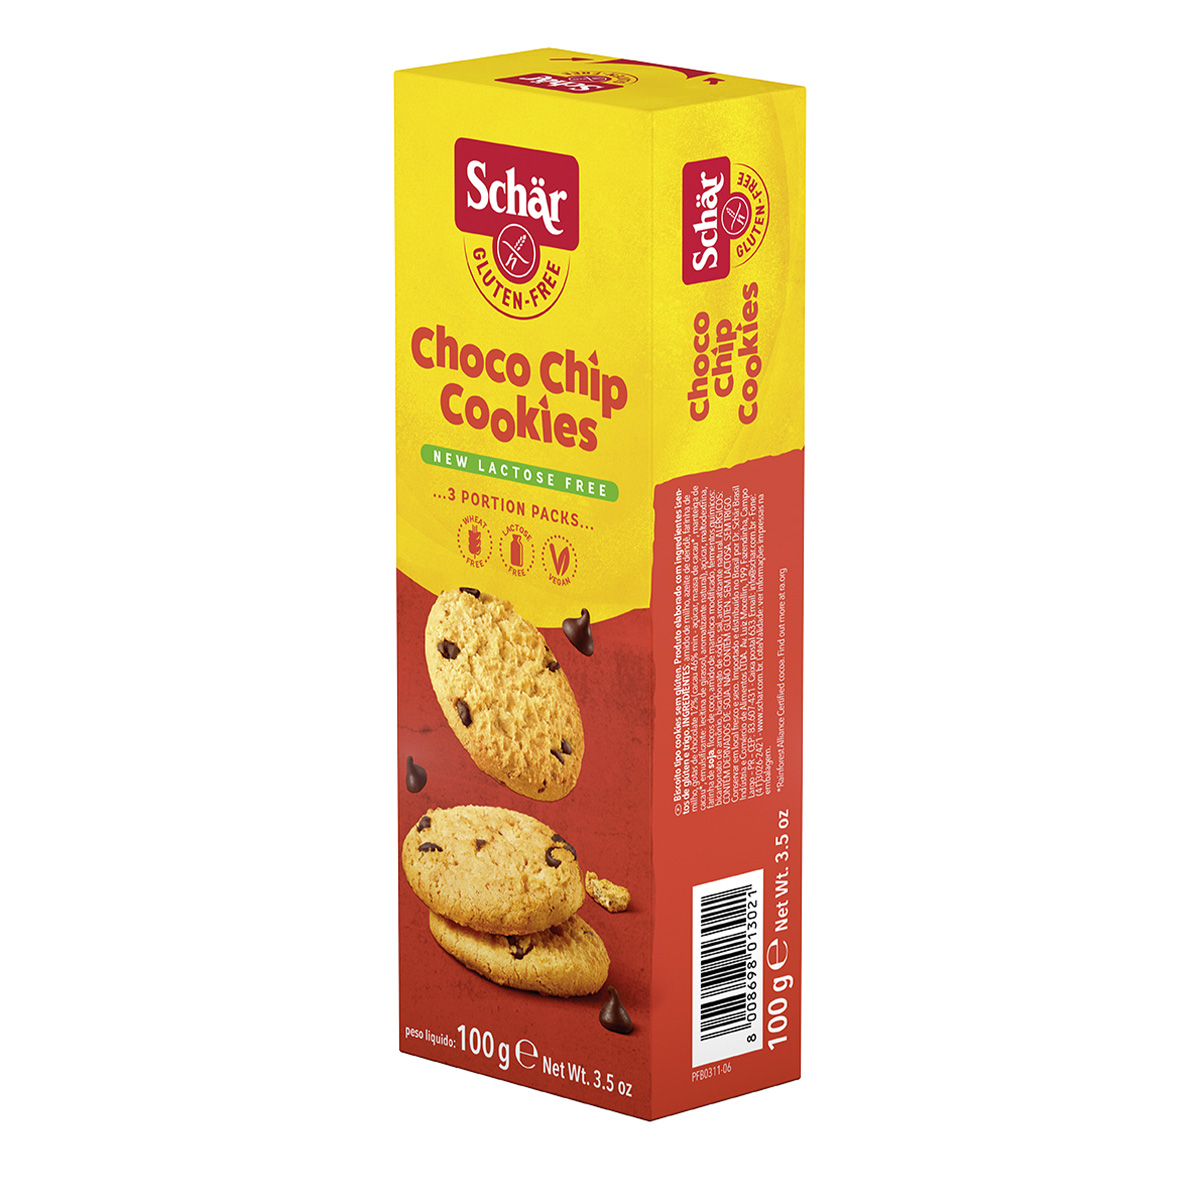 Čokoladni keksići - Choco Chip Cookies